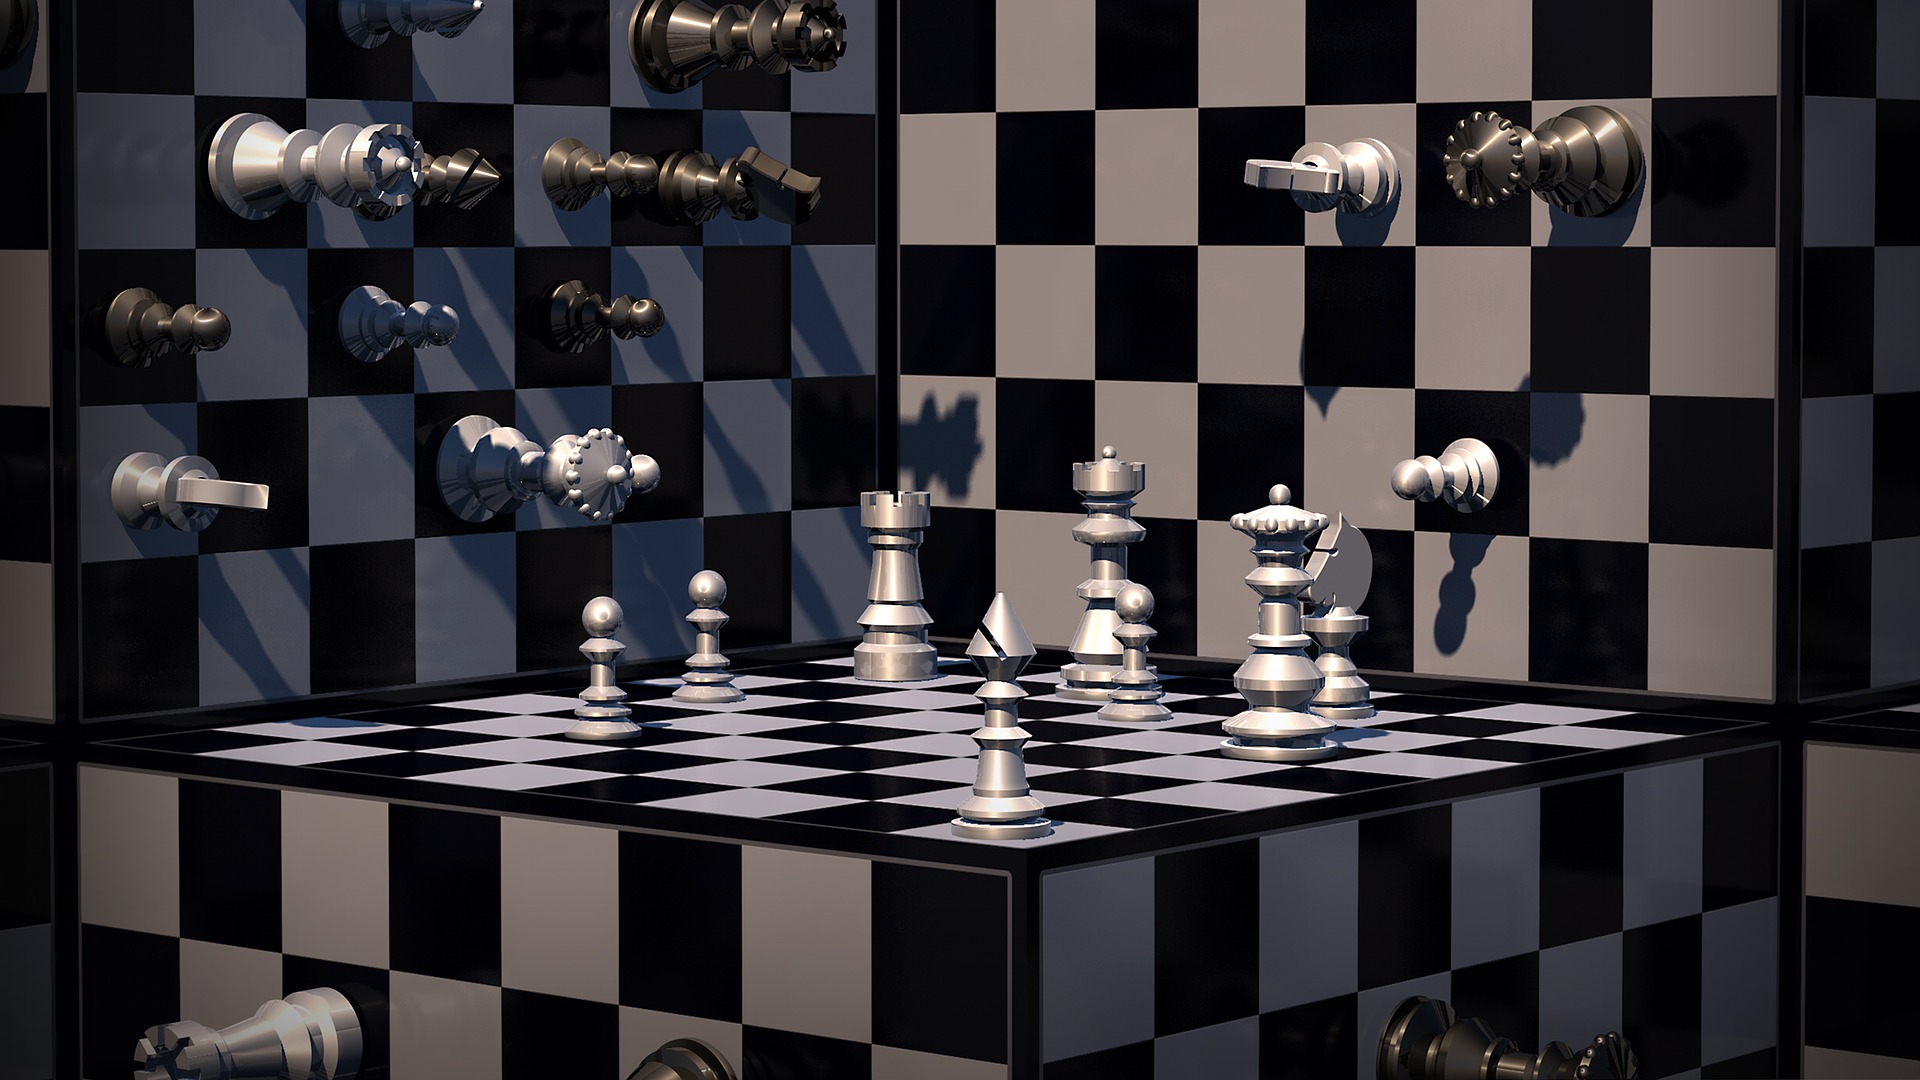 Aprender xadrez